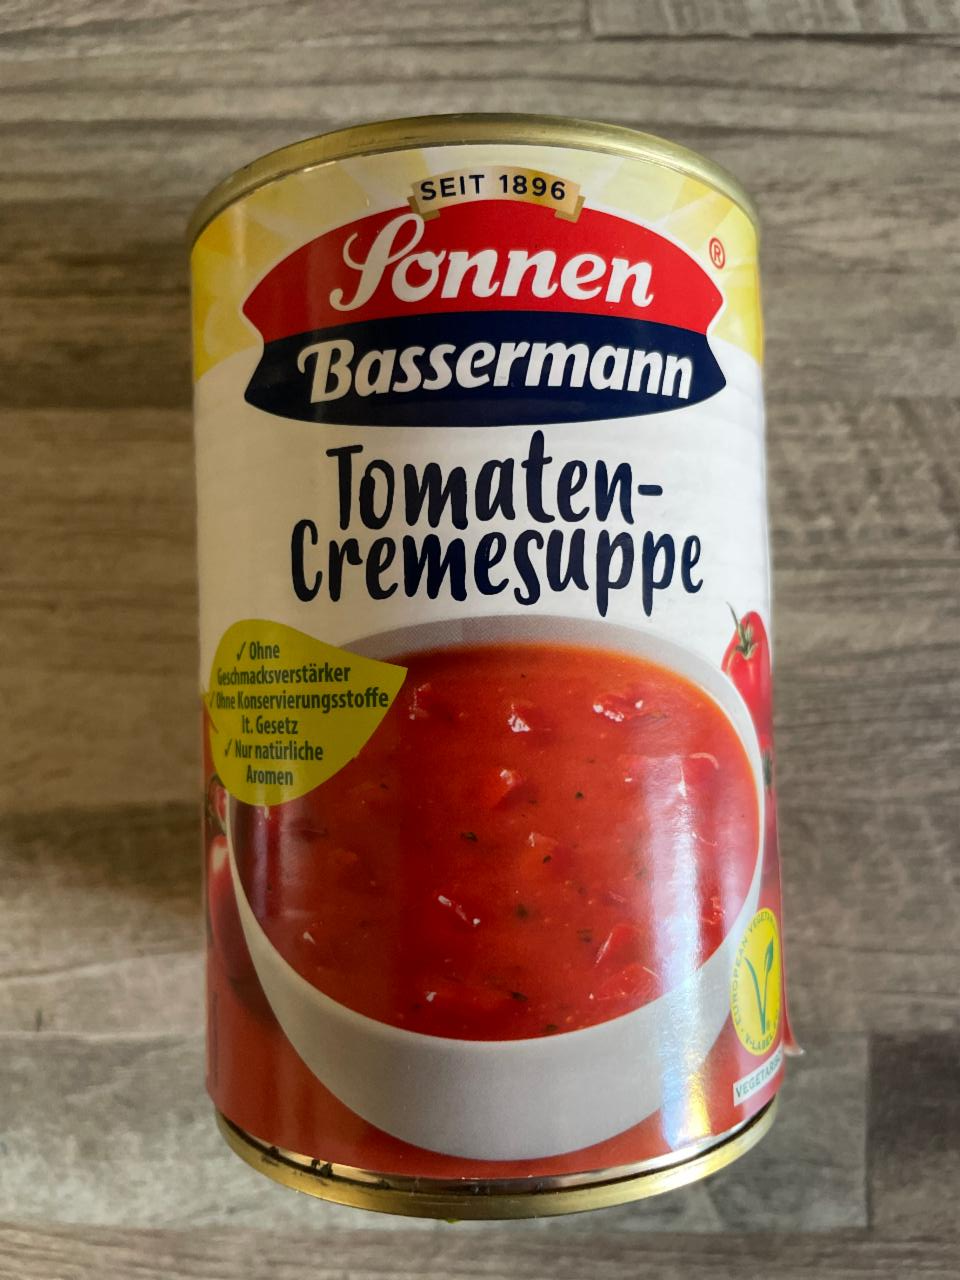 Fotografie - Tomaten-Cremesuppe Sonnen Bassermann